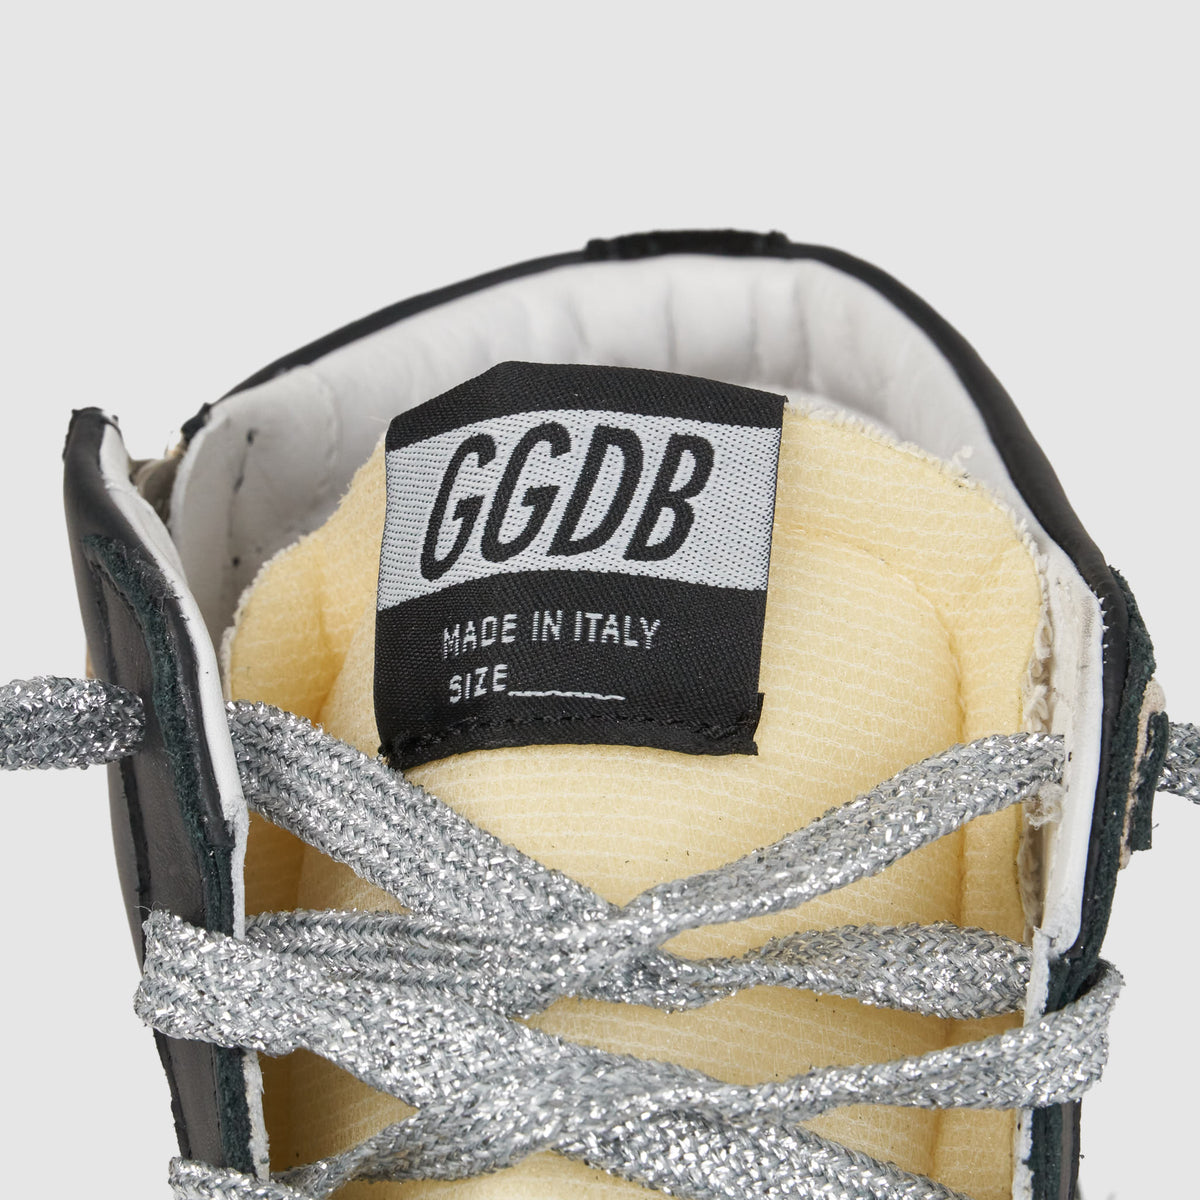 Golden Goose High Black Ice Slide Sneakers